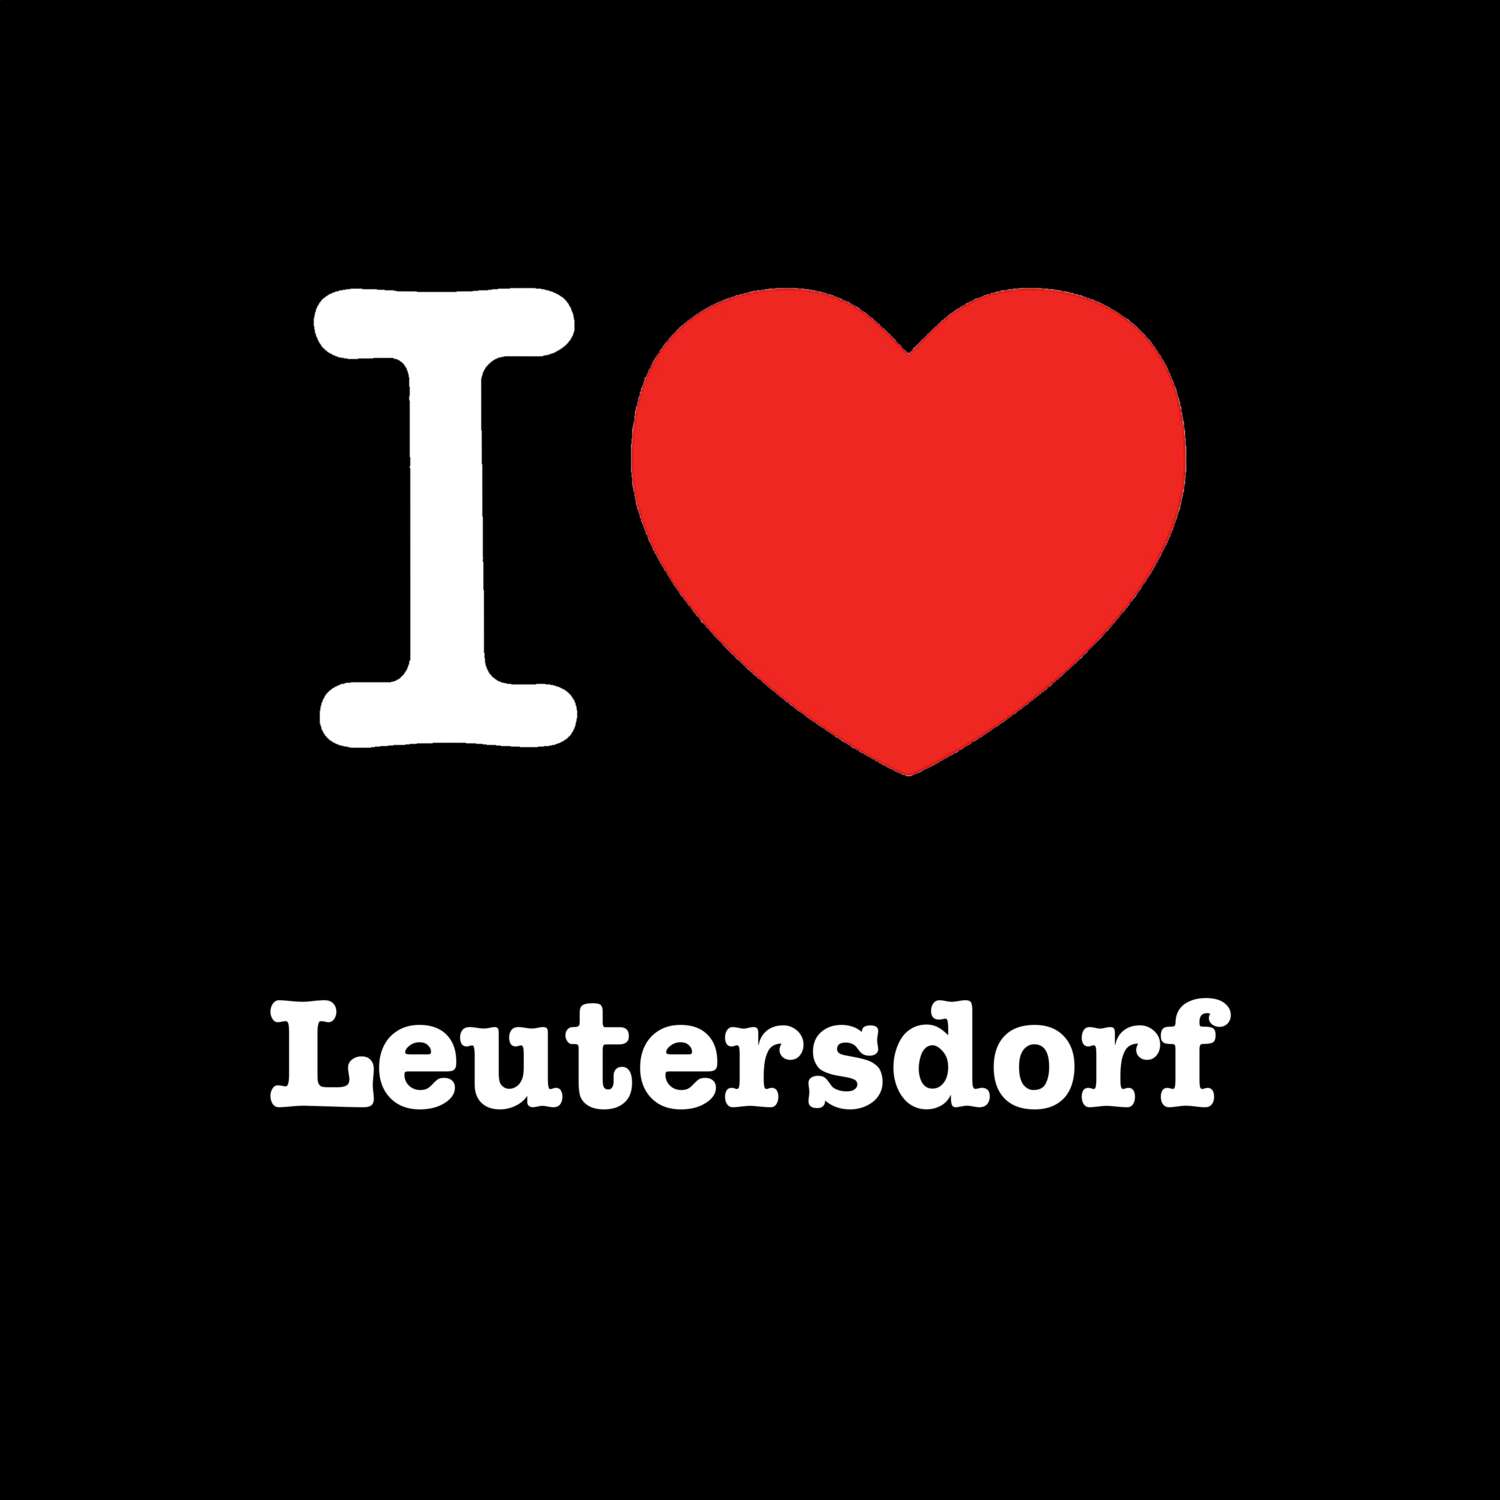 Leutersdorf T-Shirt »I love«